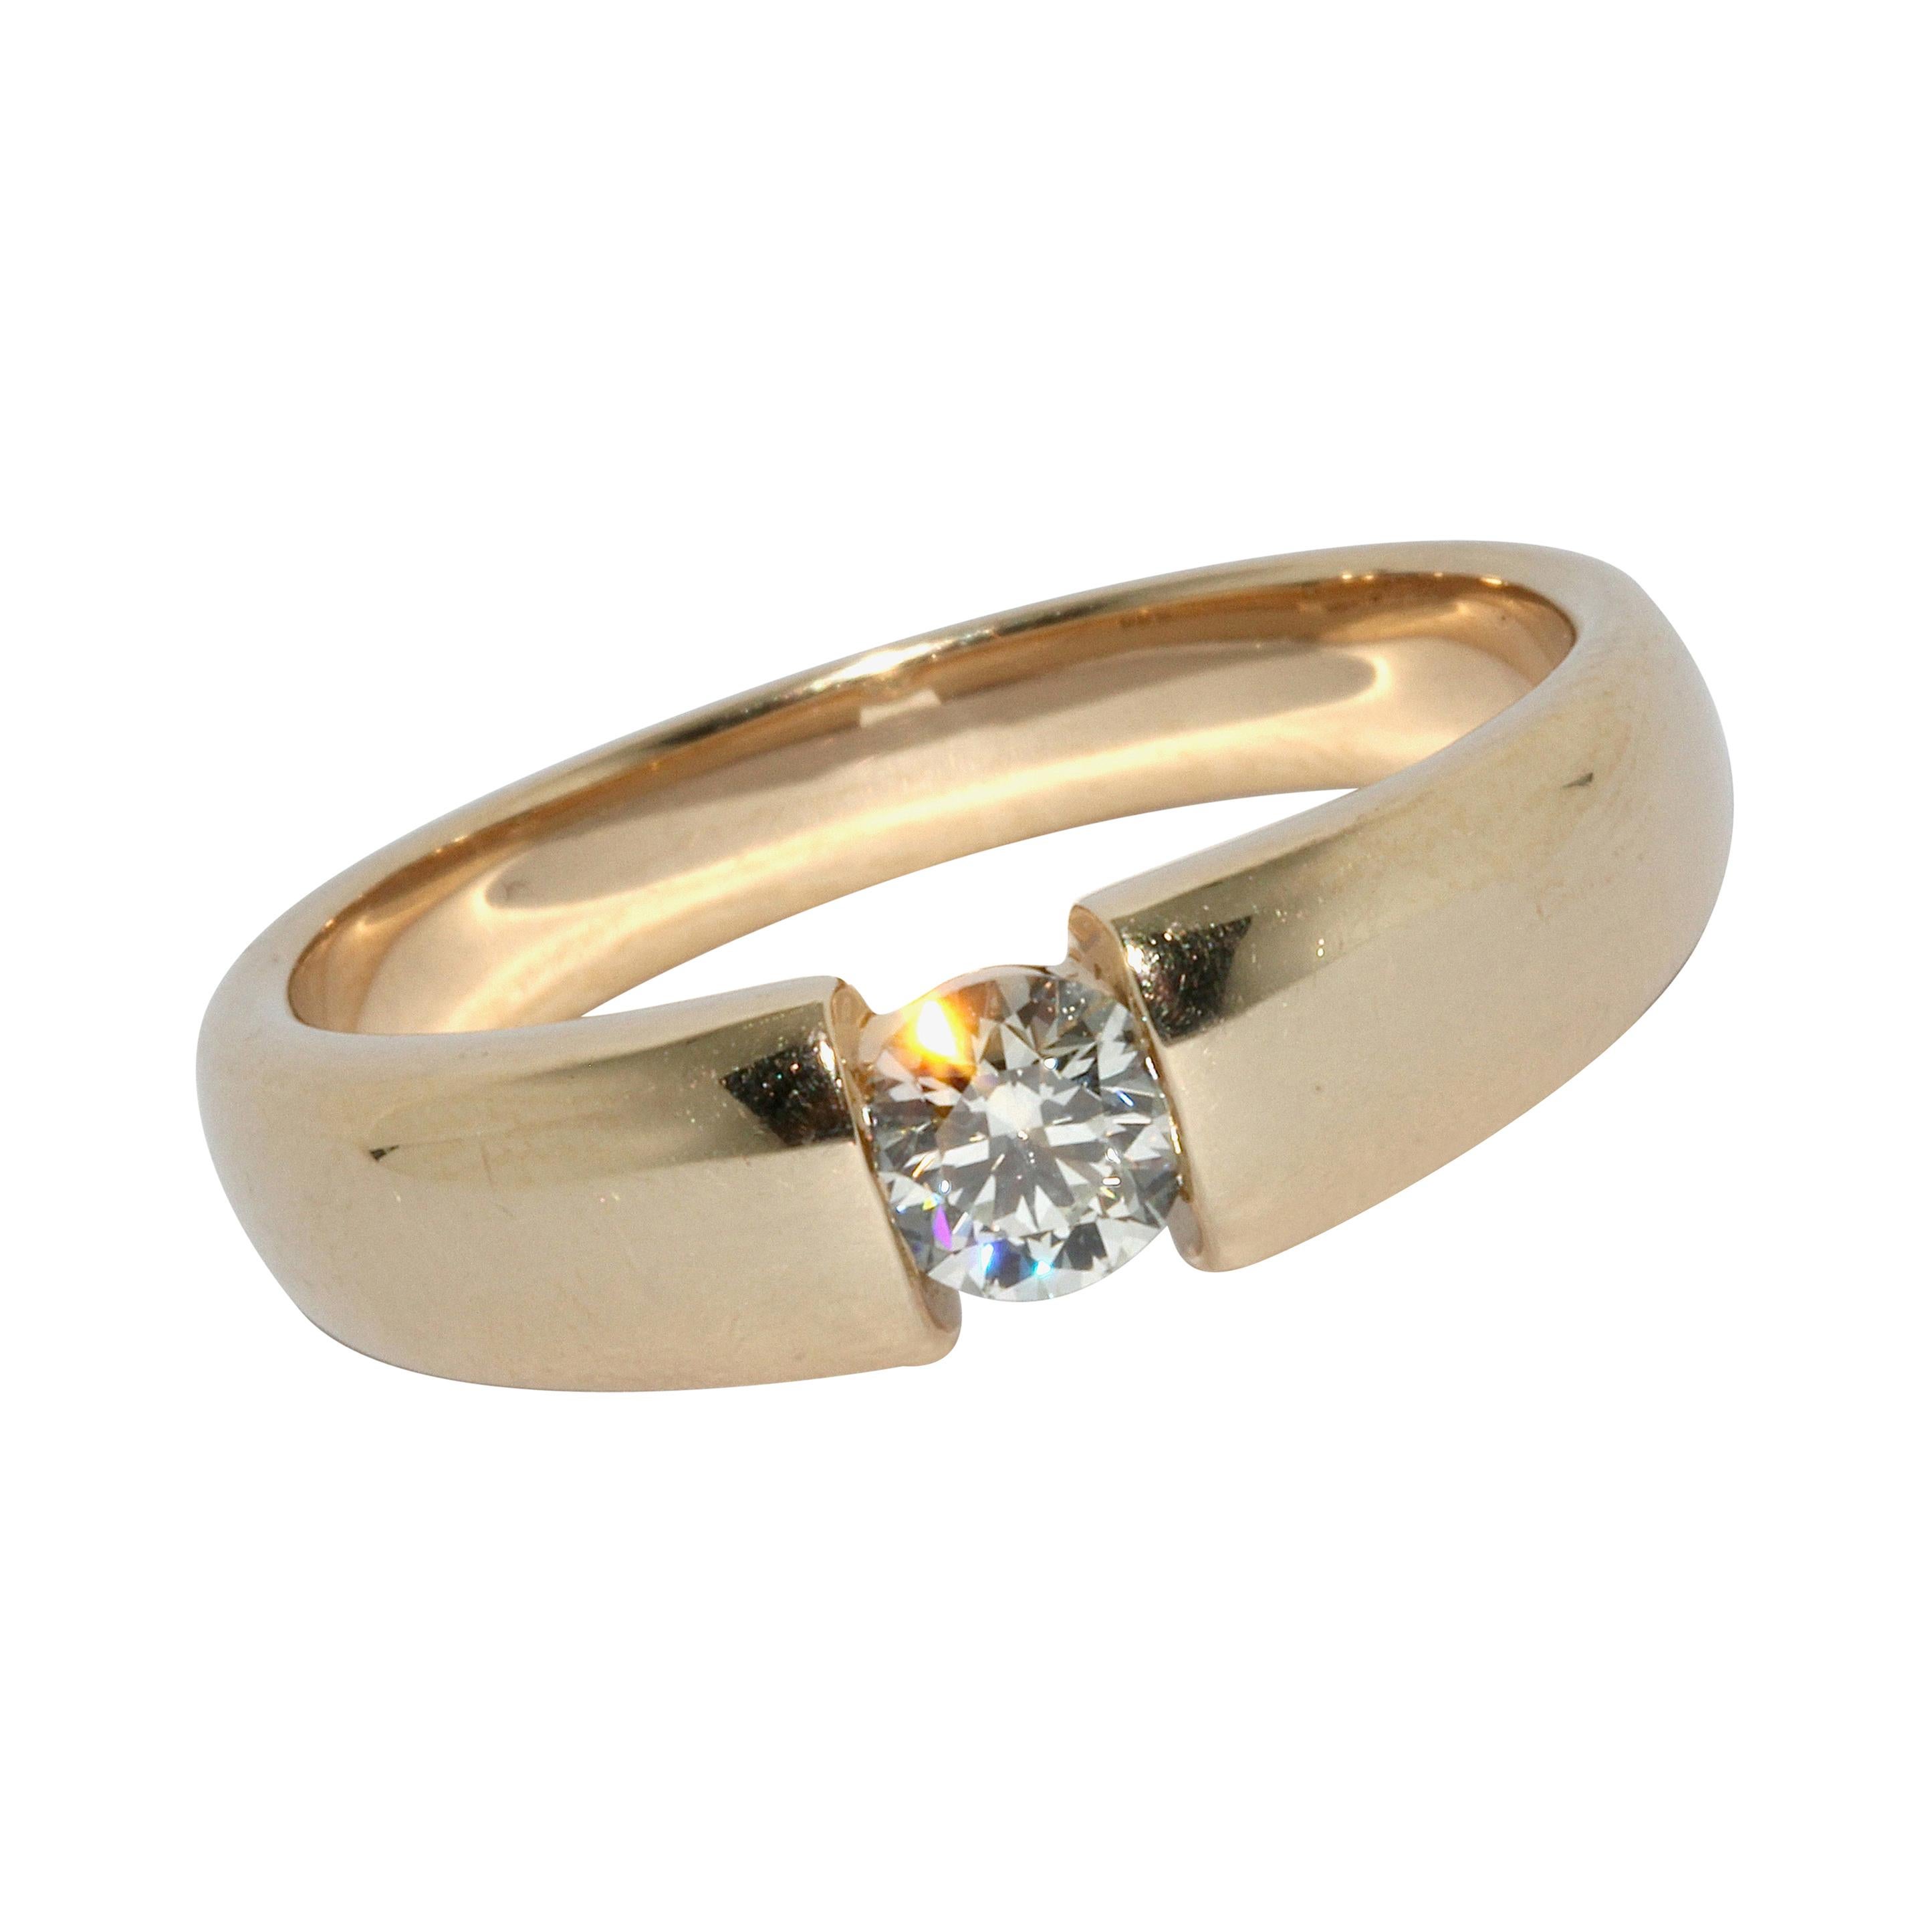 https://a.1stdibscdn.com/14-karat-yellow-gold-tension-ring-set-with-0415-carat-white-diamond-for-sale/1121189/j_123977121622222729597/12397712_master.jpeg